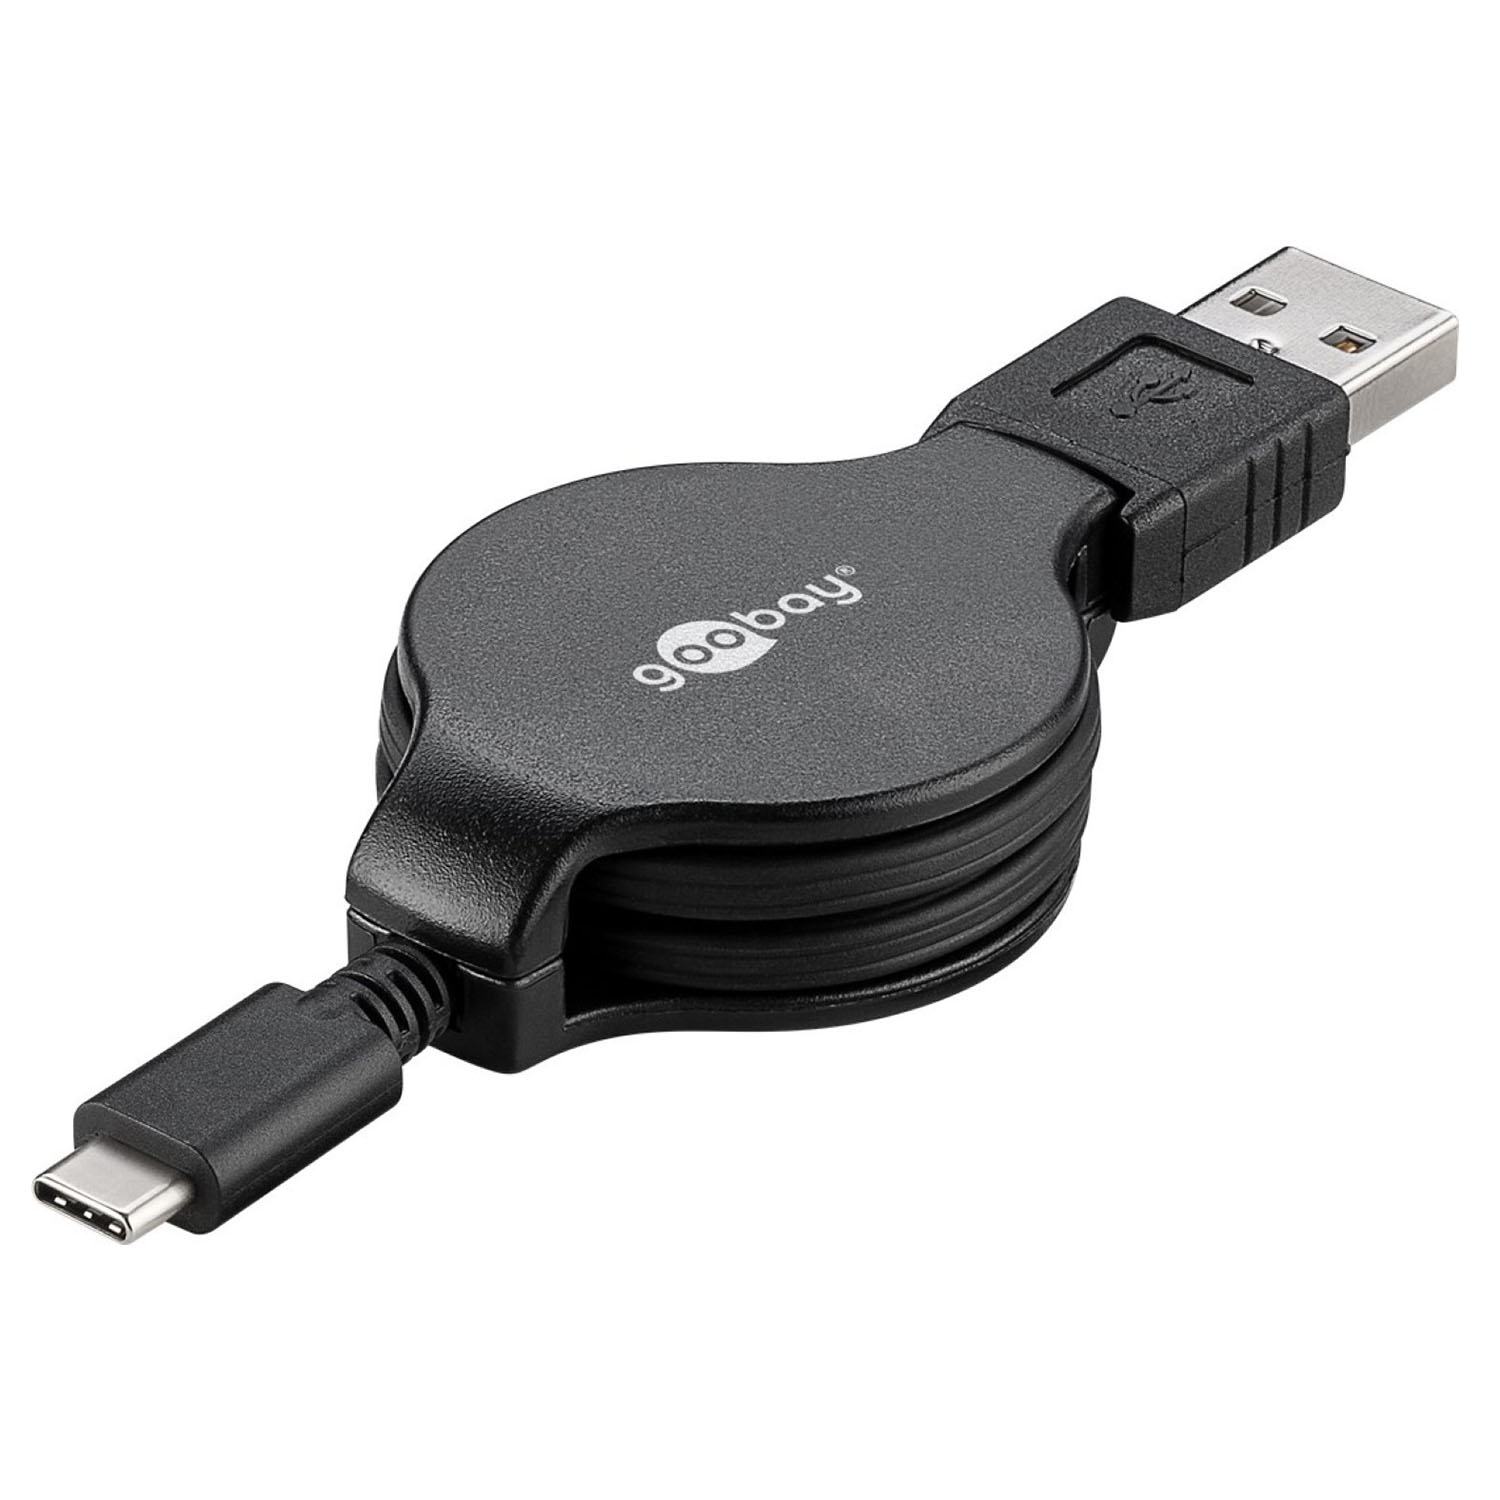 USB Lade-/Datenkabel ausziehbar schwarz GOOBAY Datenkabel, Kabel C Ladekabel